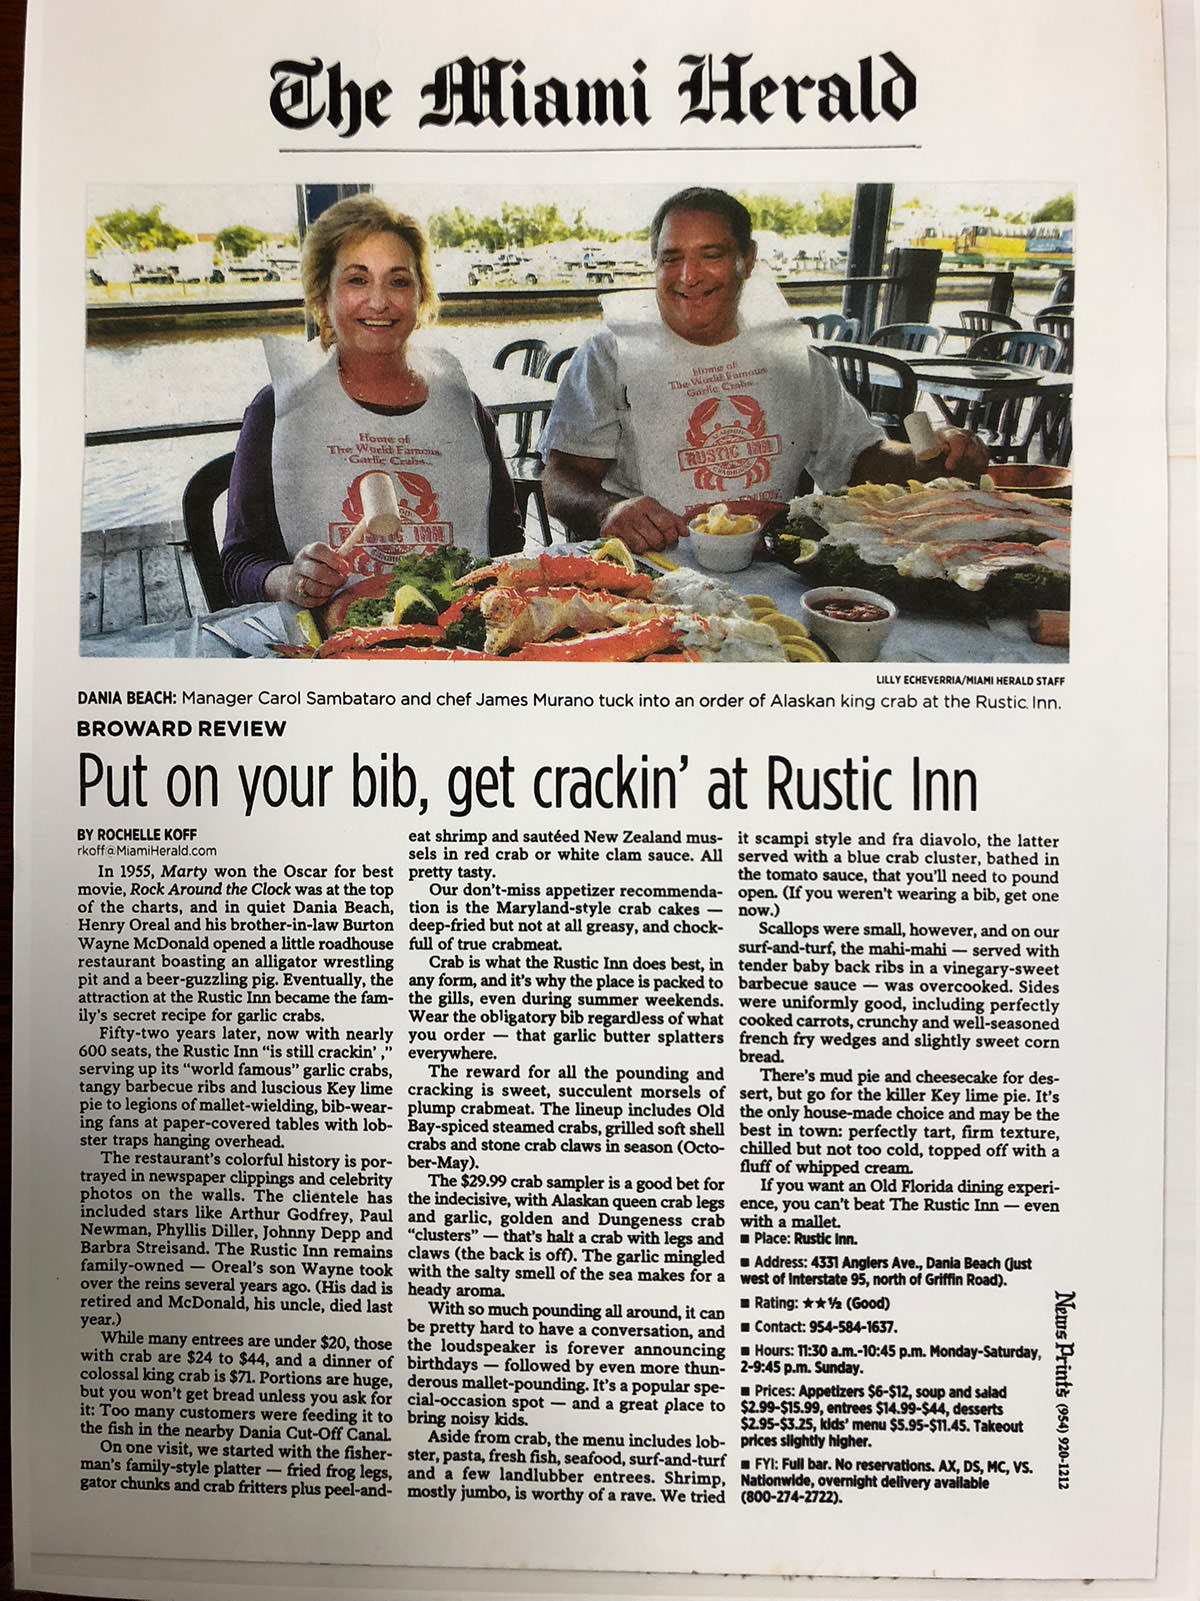 The Miami Herald - Put on your bib, get crakin' at Rustic Inn